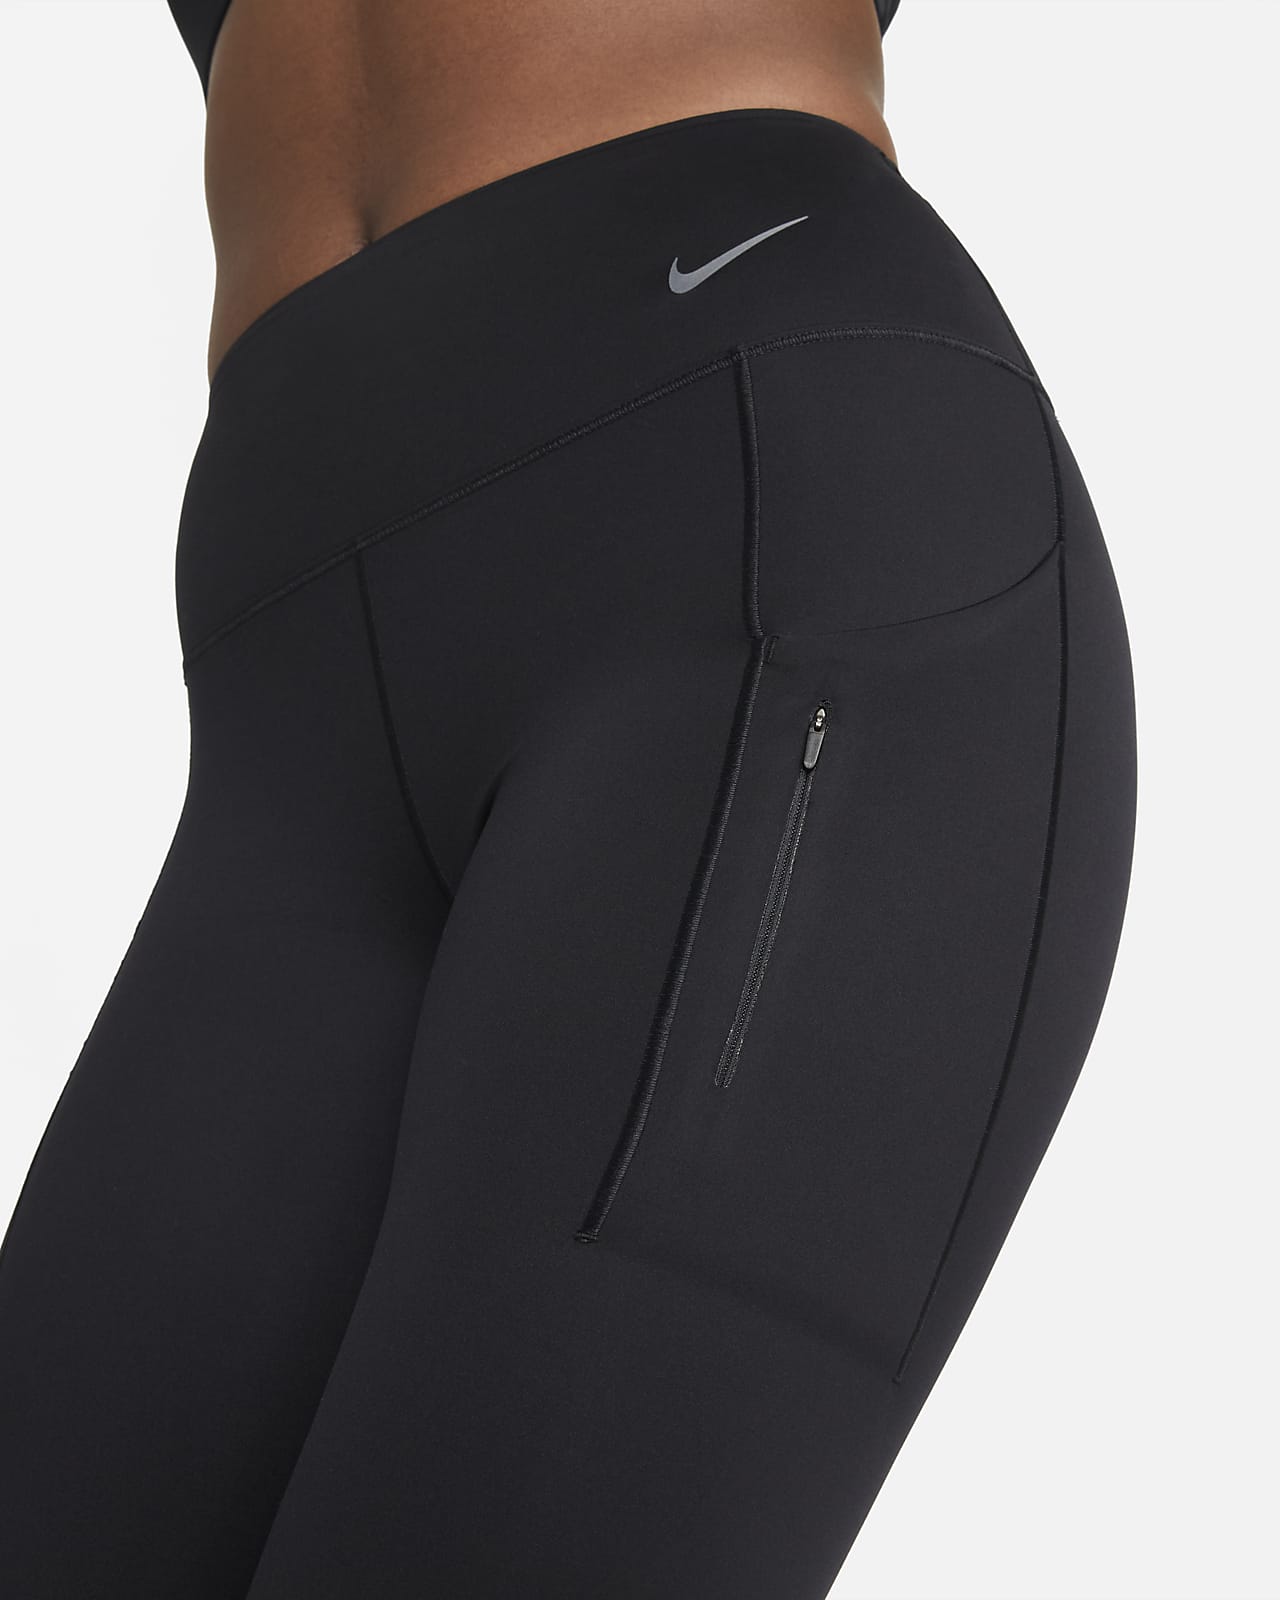 NWT Nike Ultra Femme Leggings Dark Grey High Rise Pants Size Small AR2201  063